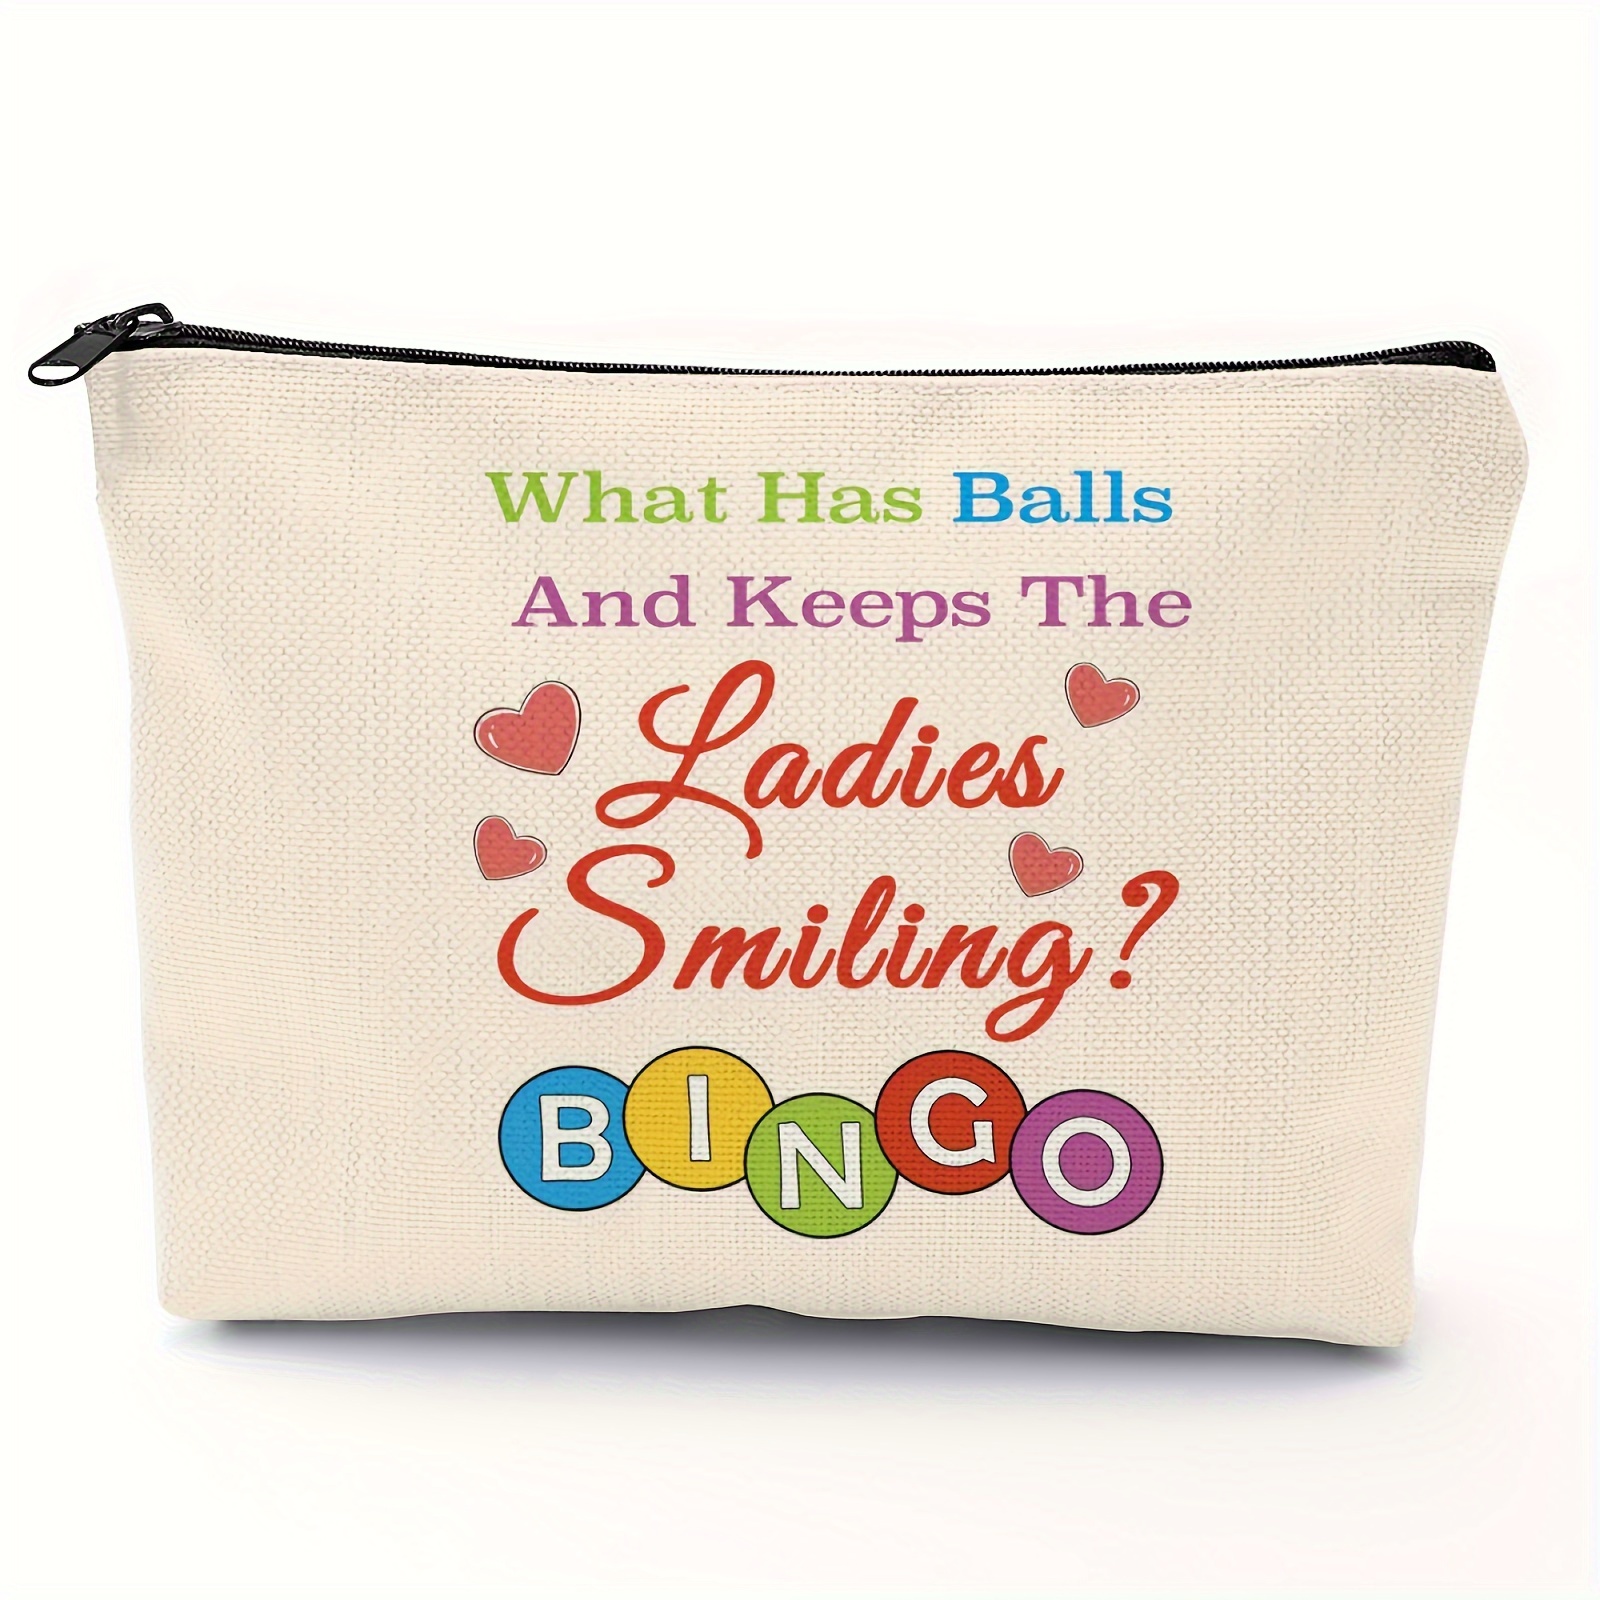 

Bingo Lover Gift For Women, Makeup Bag, Bingo Player Gift, Letter Print Cosmetic Bag, Portable Zipper Makeup Storage Bag, Clutch Travel Toiletry Organizer Bag